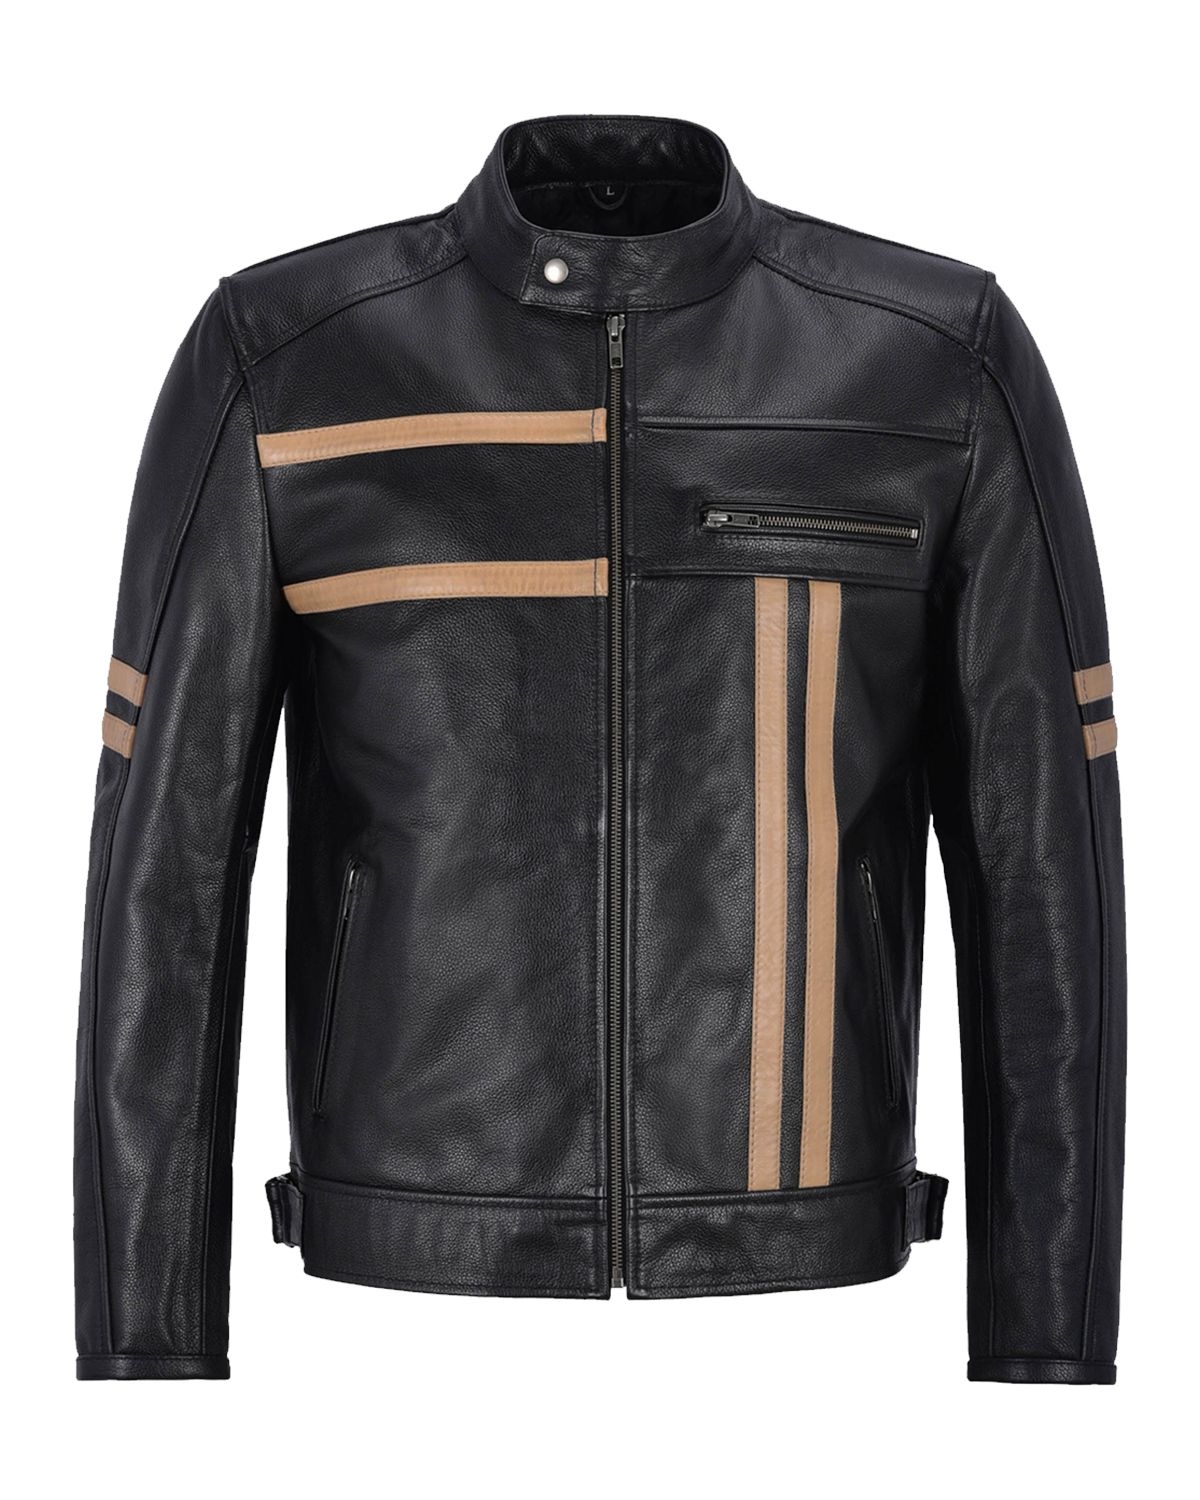 Men's Black With Beige Stripes Biker Motorcycle Leather Jacket